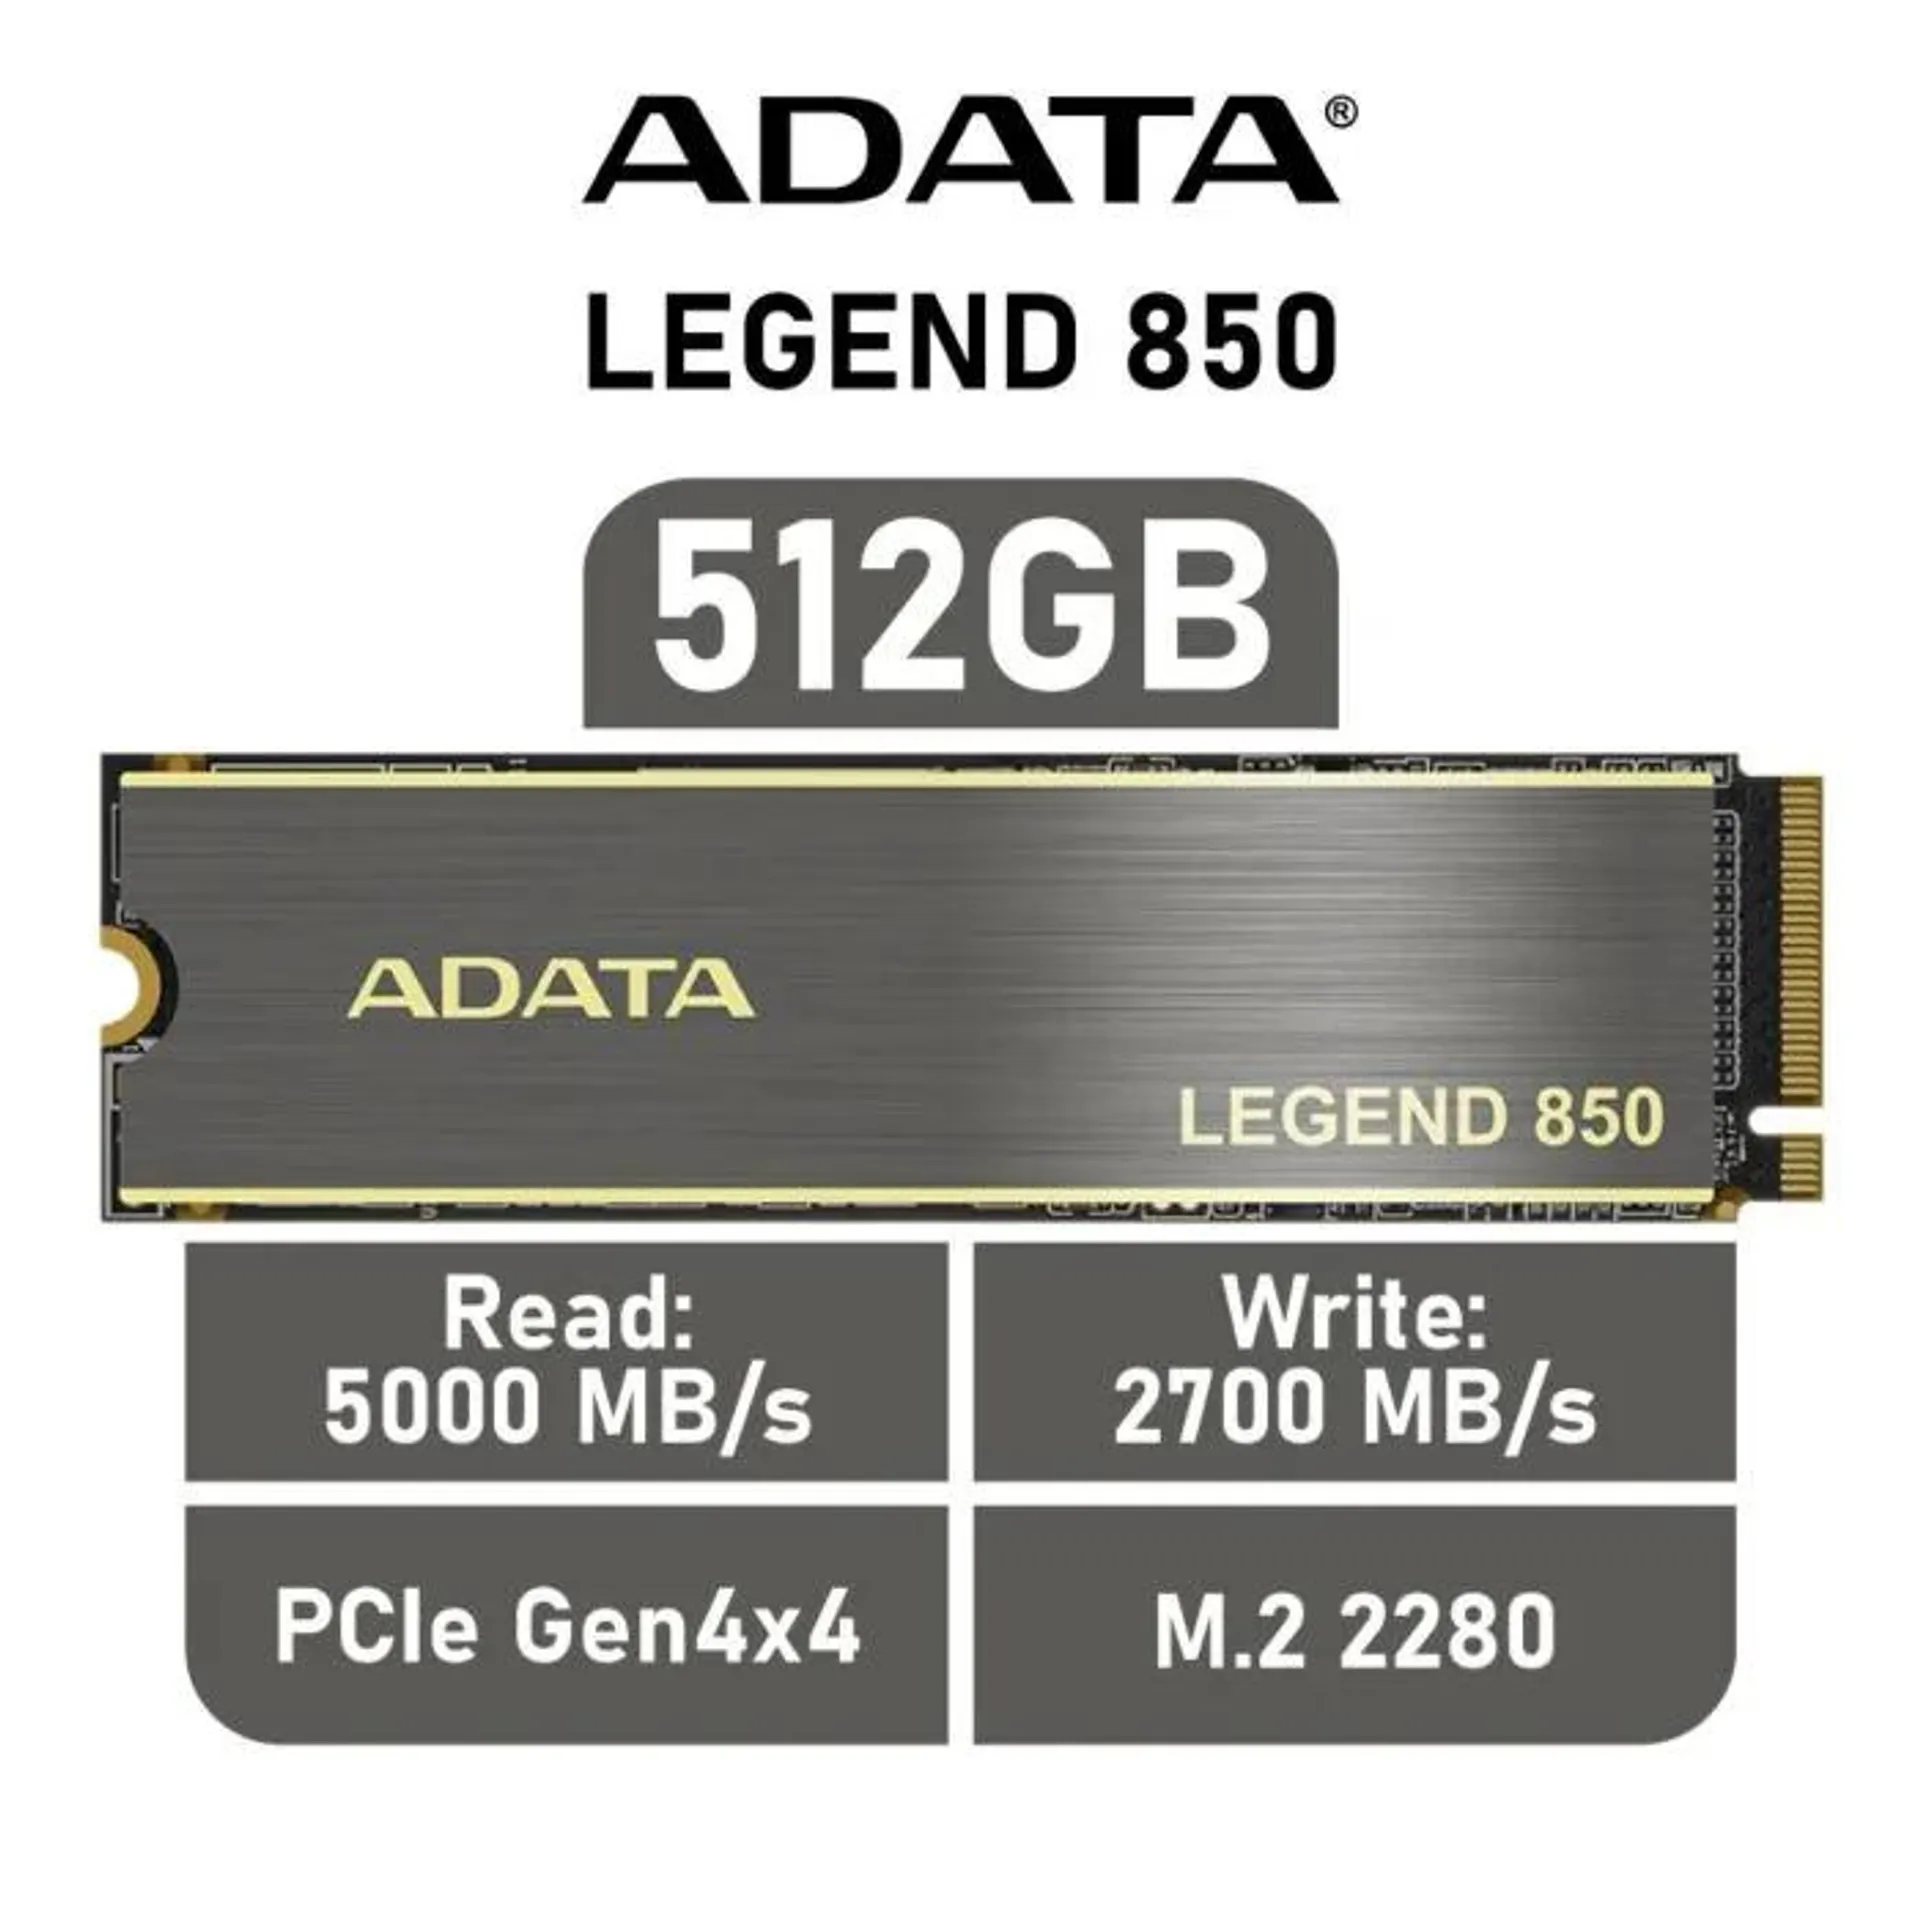 ADATA LEGEND 850 512GB PCIe Gen4x4 ALEG-850-512GCS M.2 2280 Solid State Drive